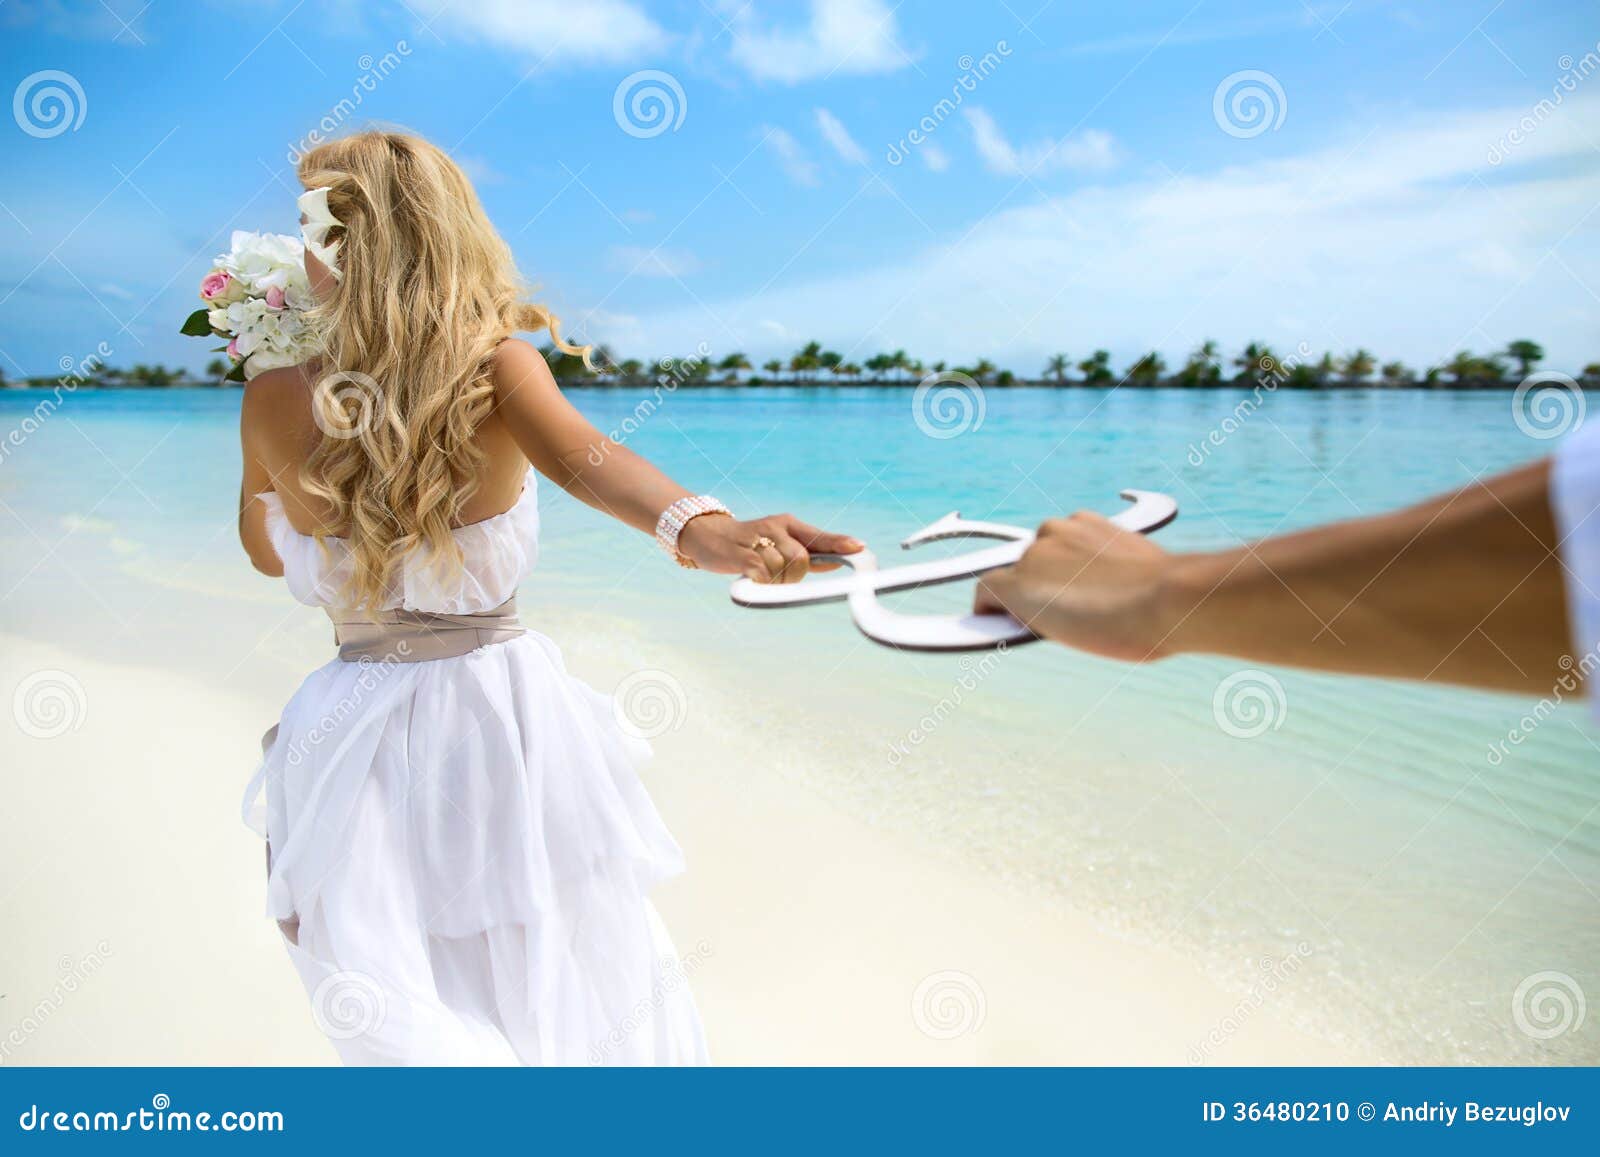 wedding on maldives